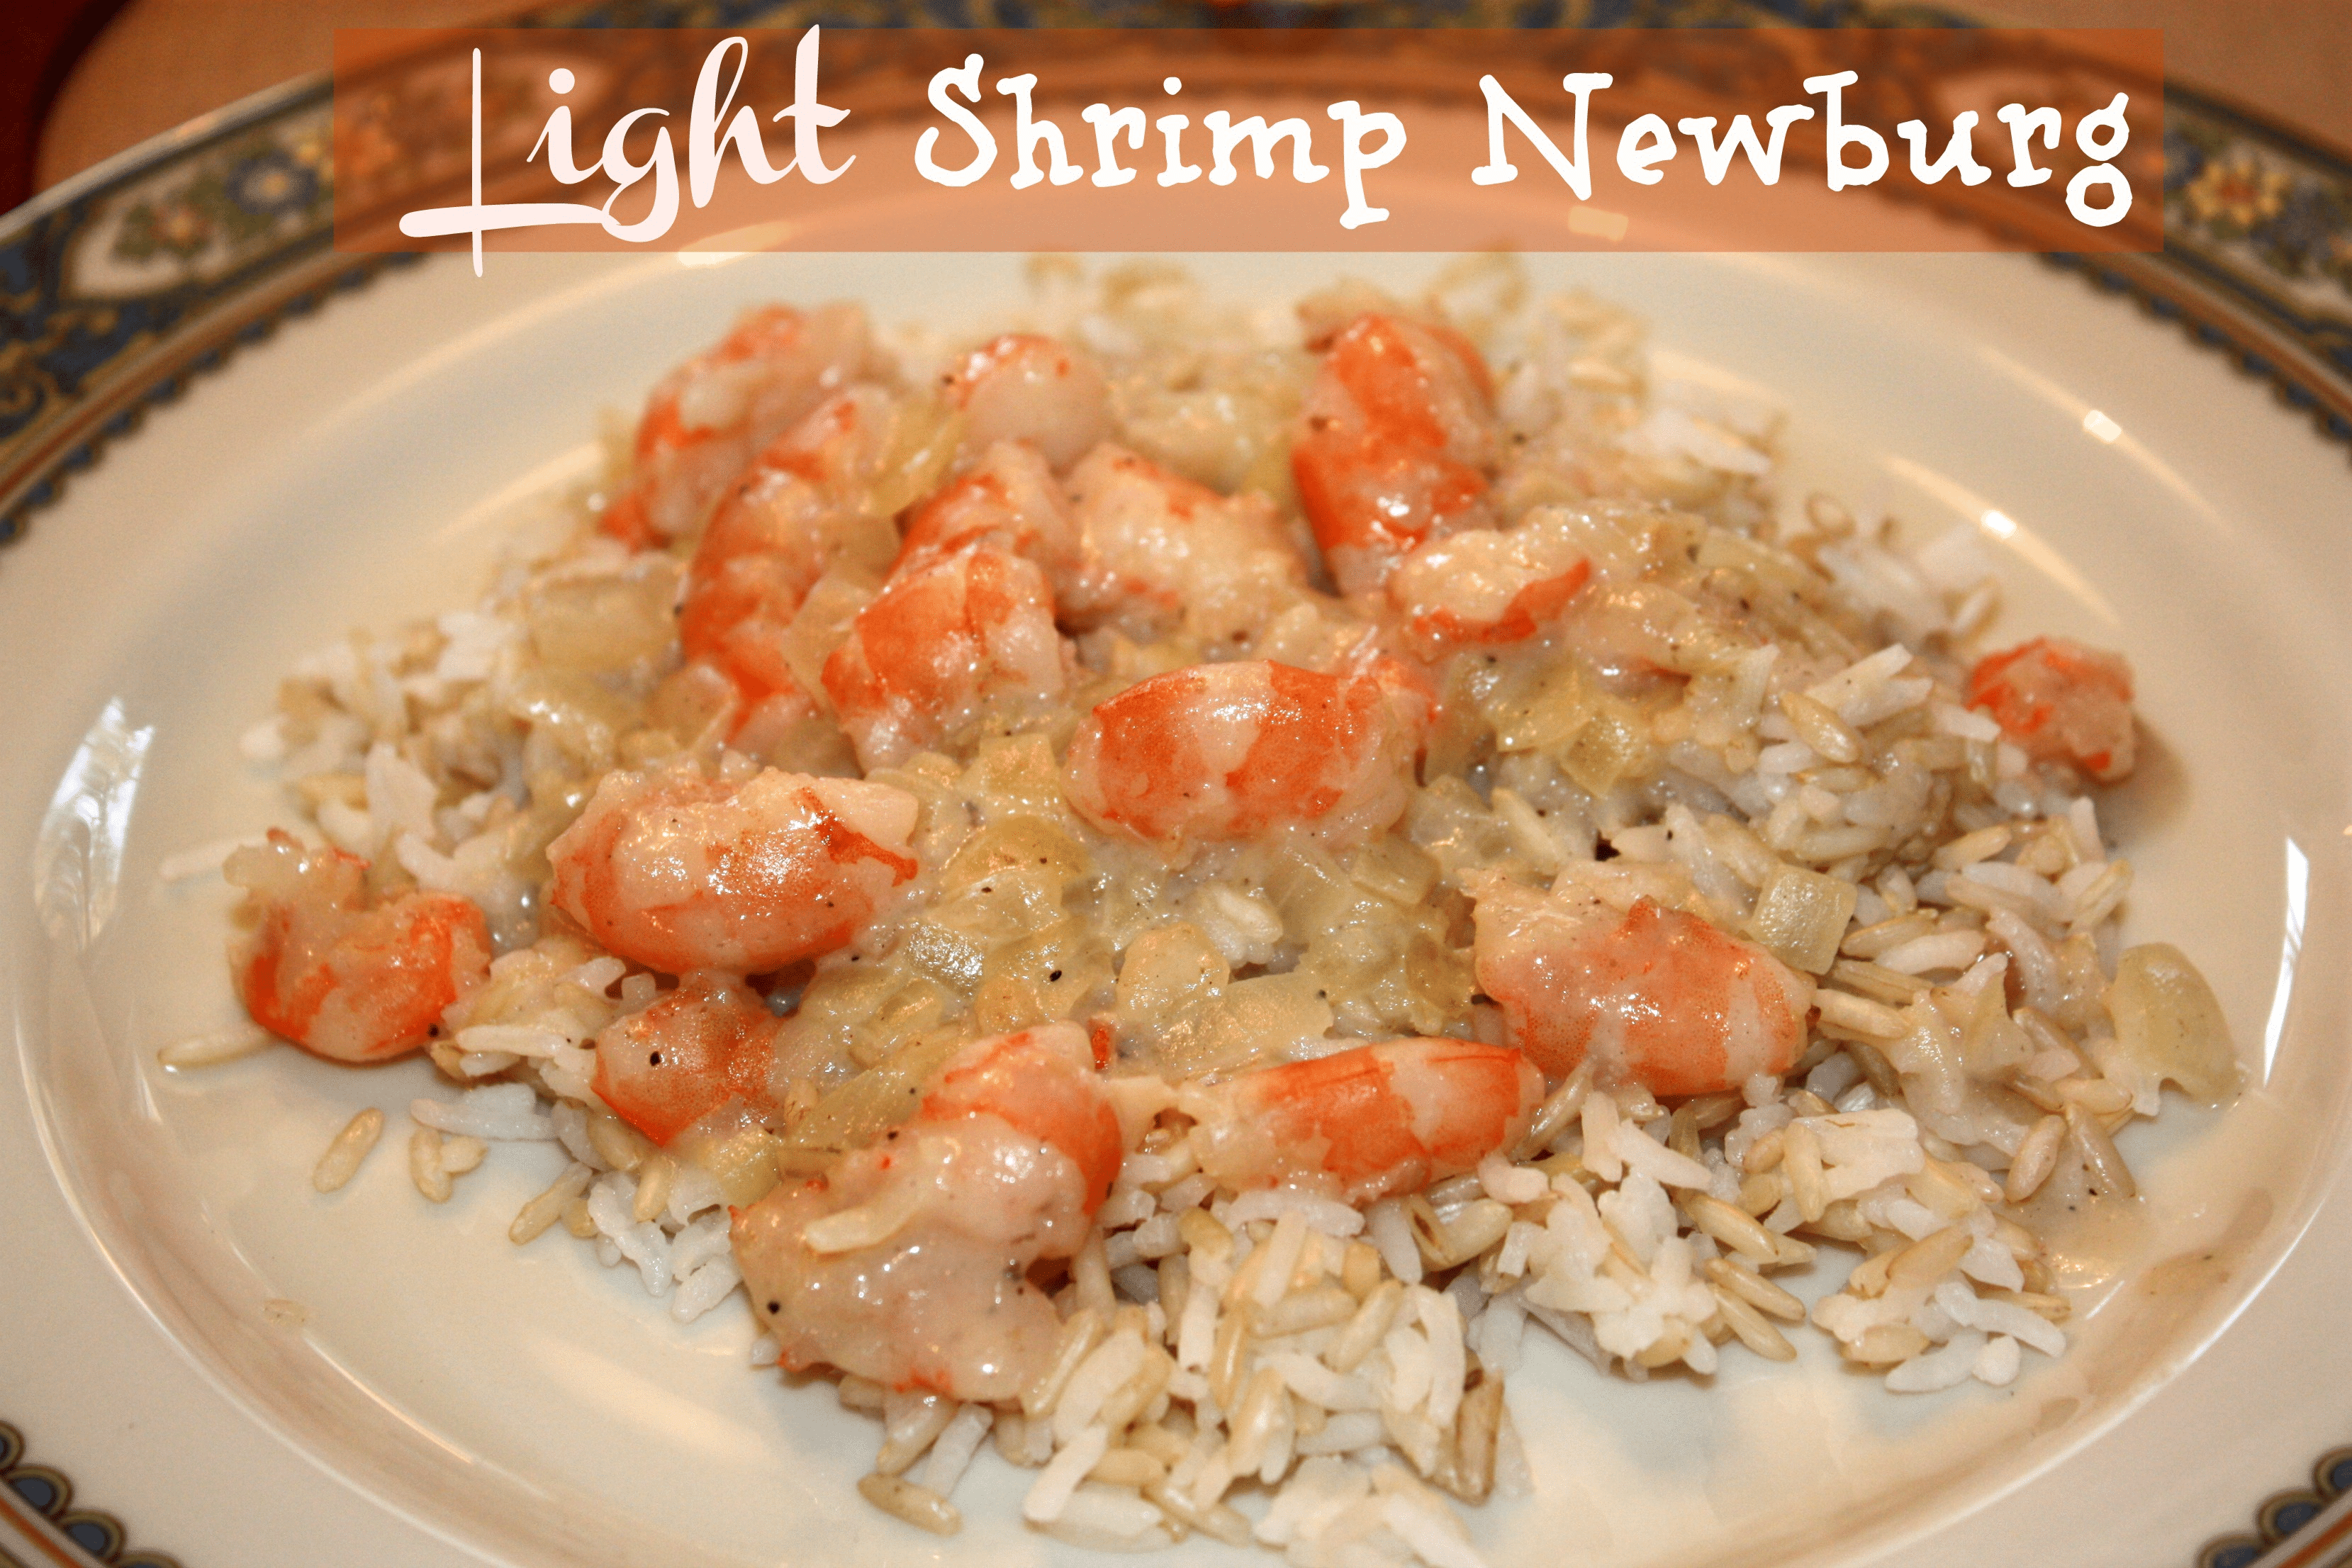 Light Shrimp Newburg